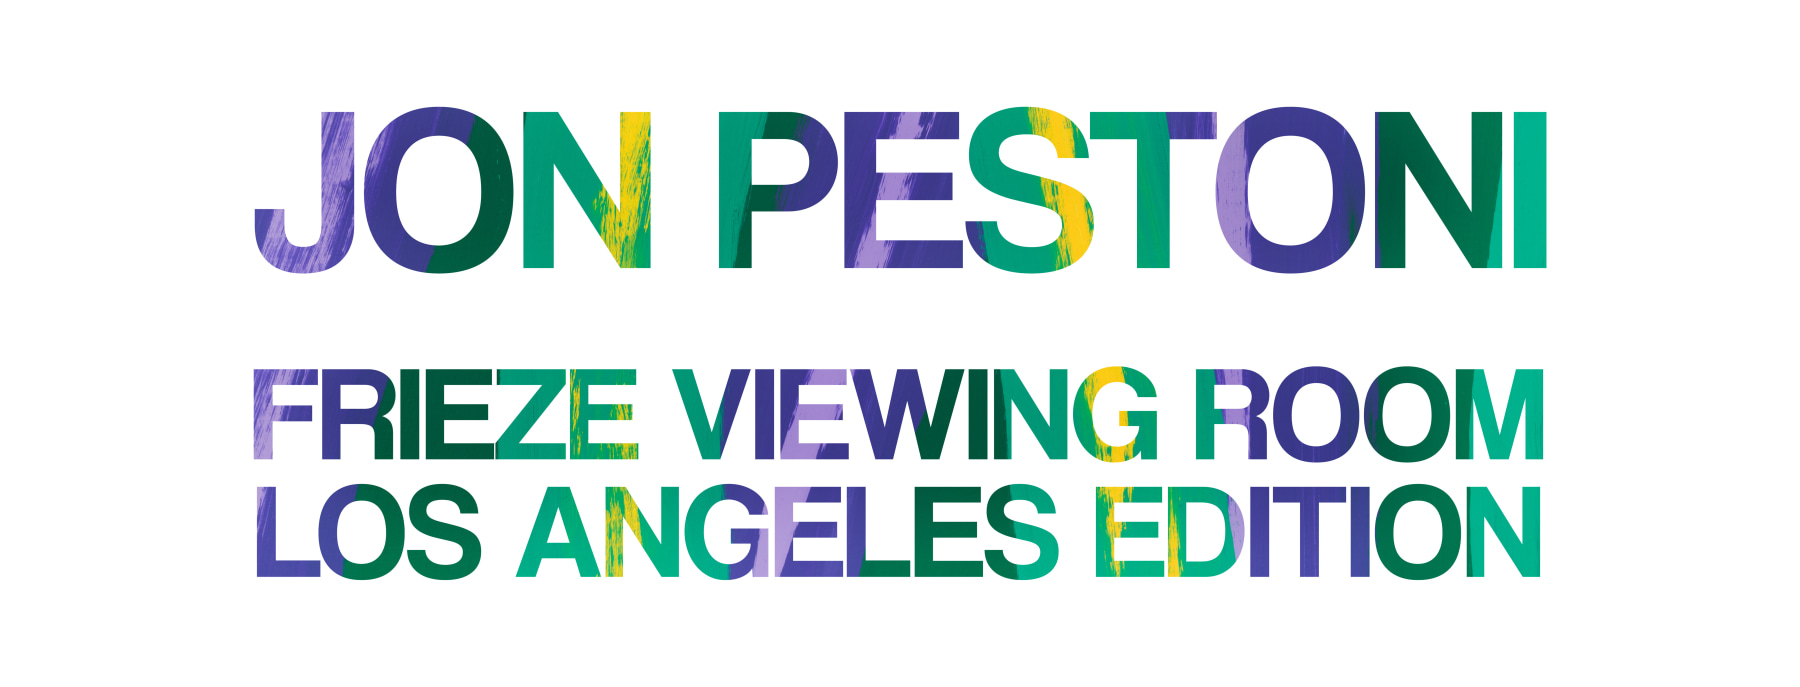 Jon Pestoni - Frieze Viewing Room Los Angeles Edition - 线上展厅 - David Kordansky Gallery